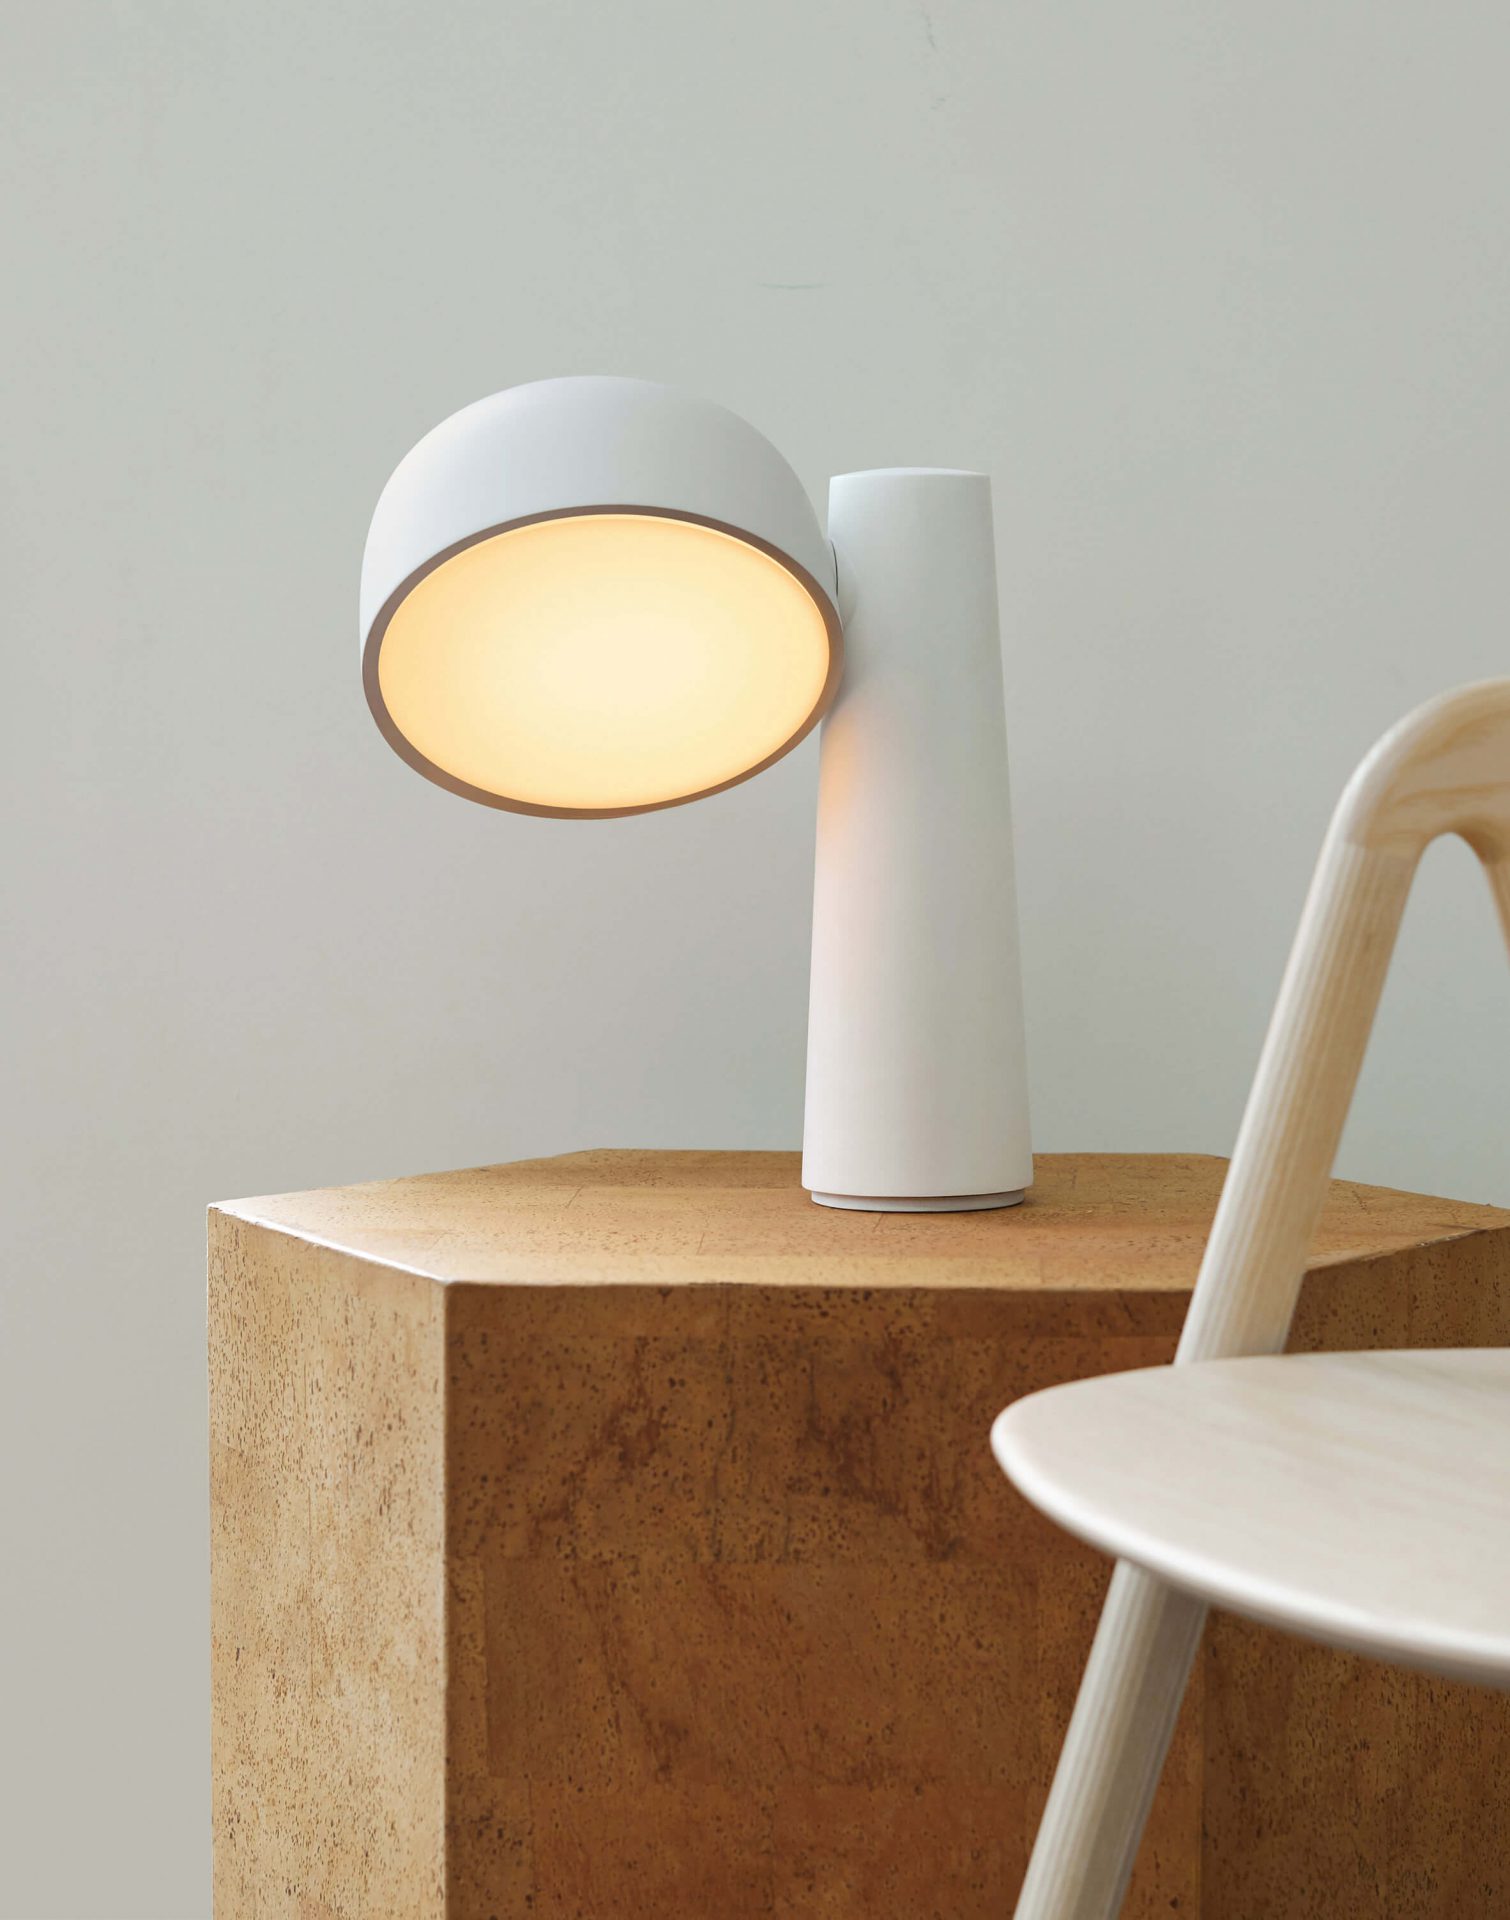 Gantri - Gio table task lamp